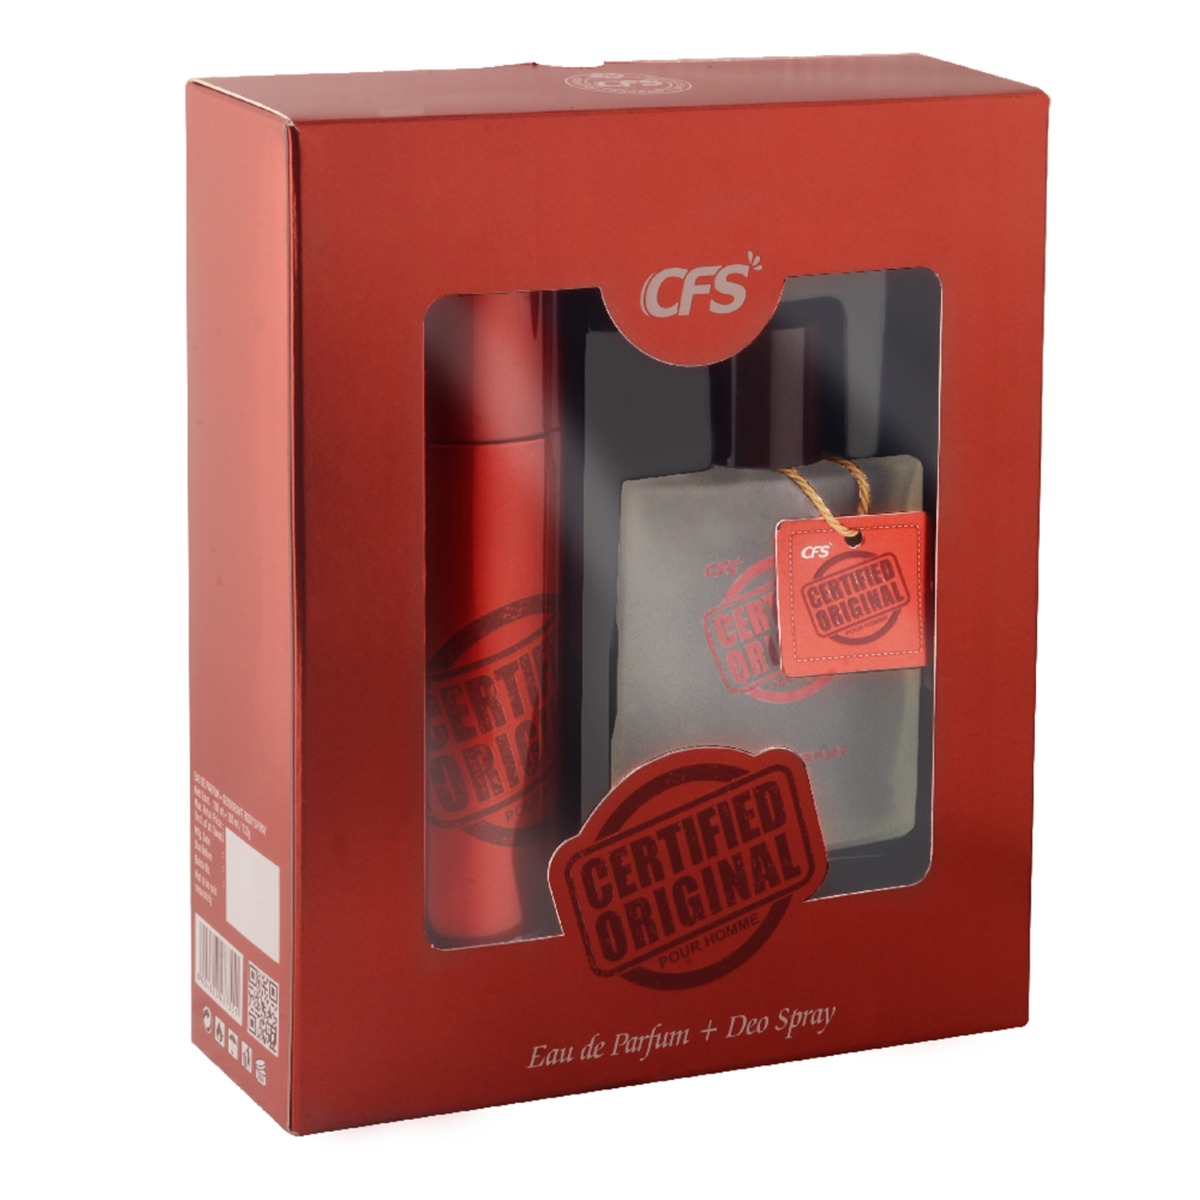 CFS Certified Original Brown Unisex Long Lasting Eau De Parfum And Deodorant, Combo